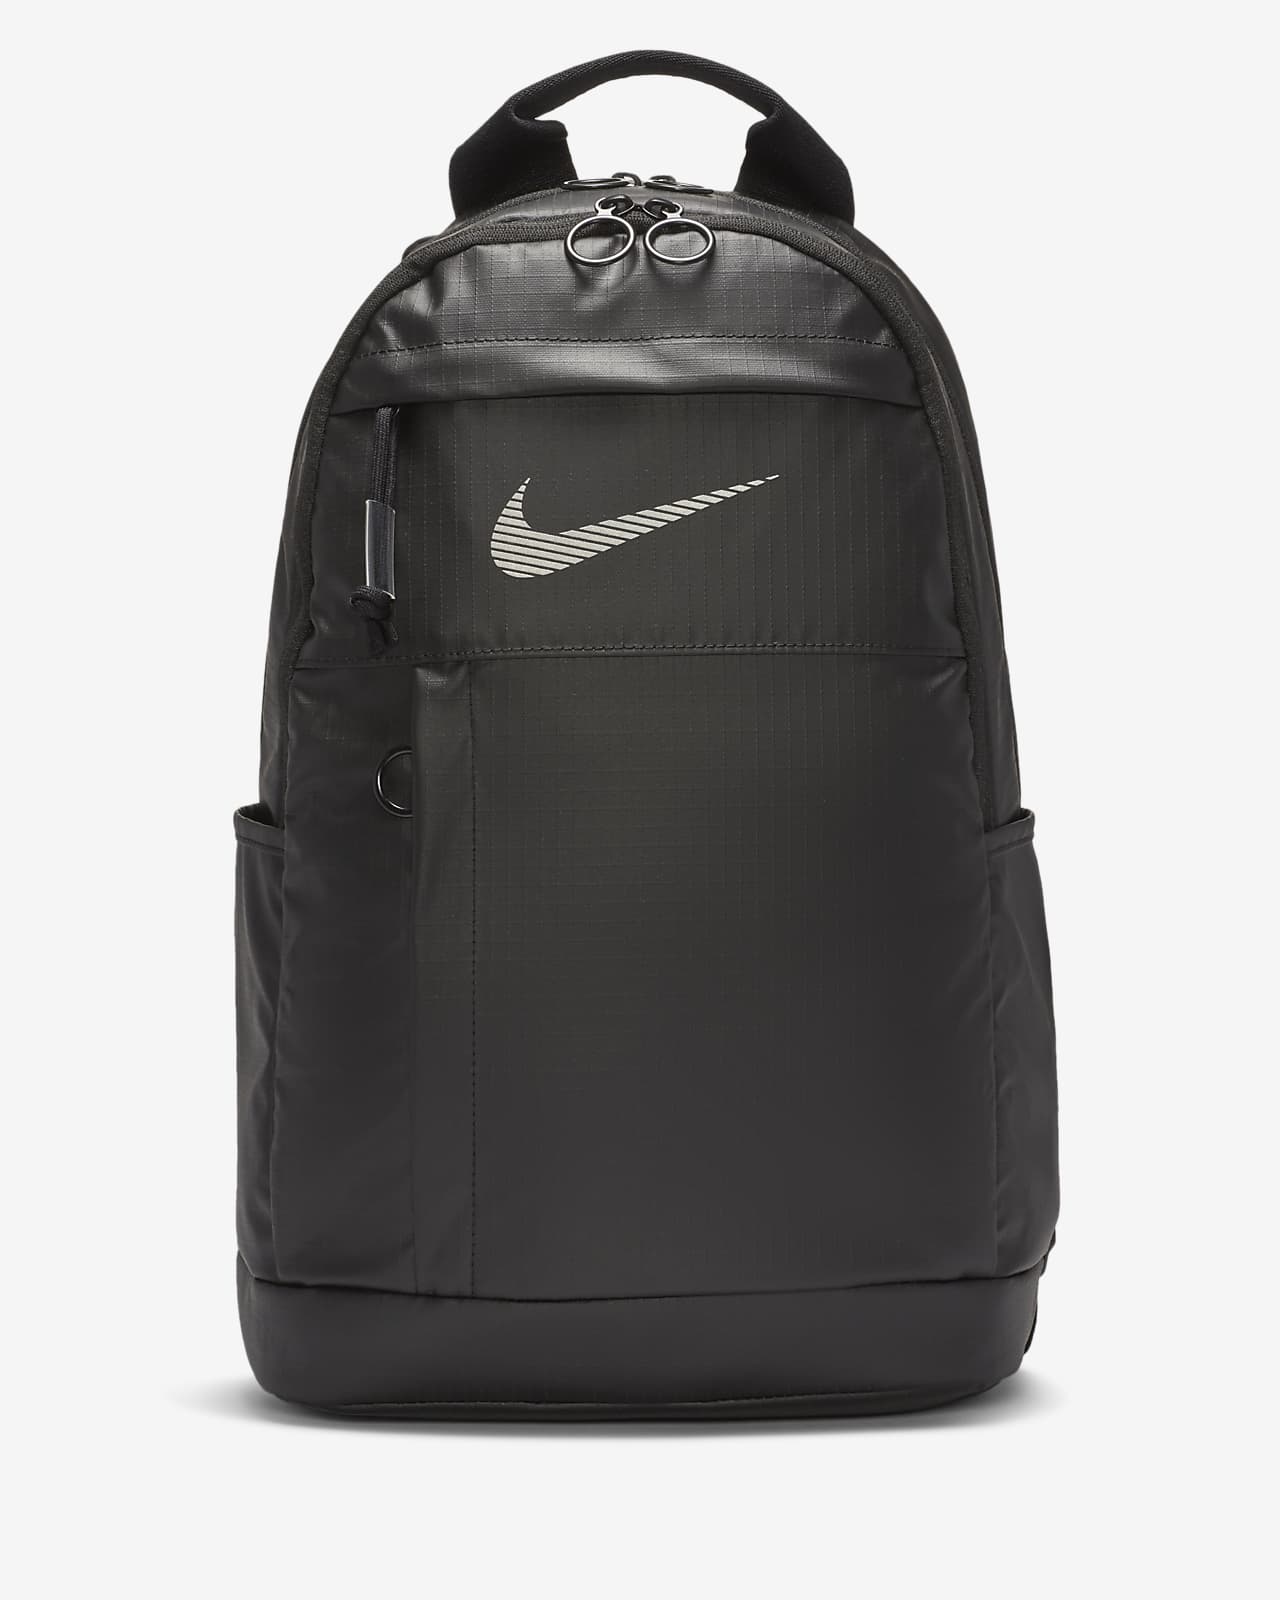 nike sportswear backpack